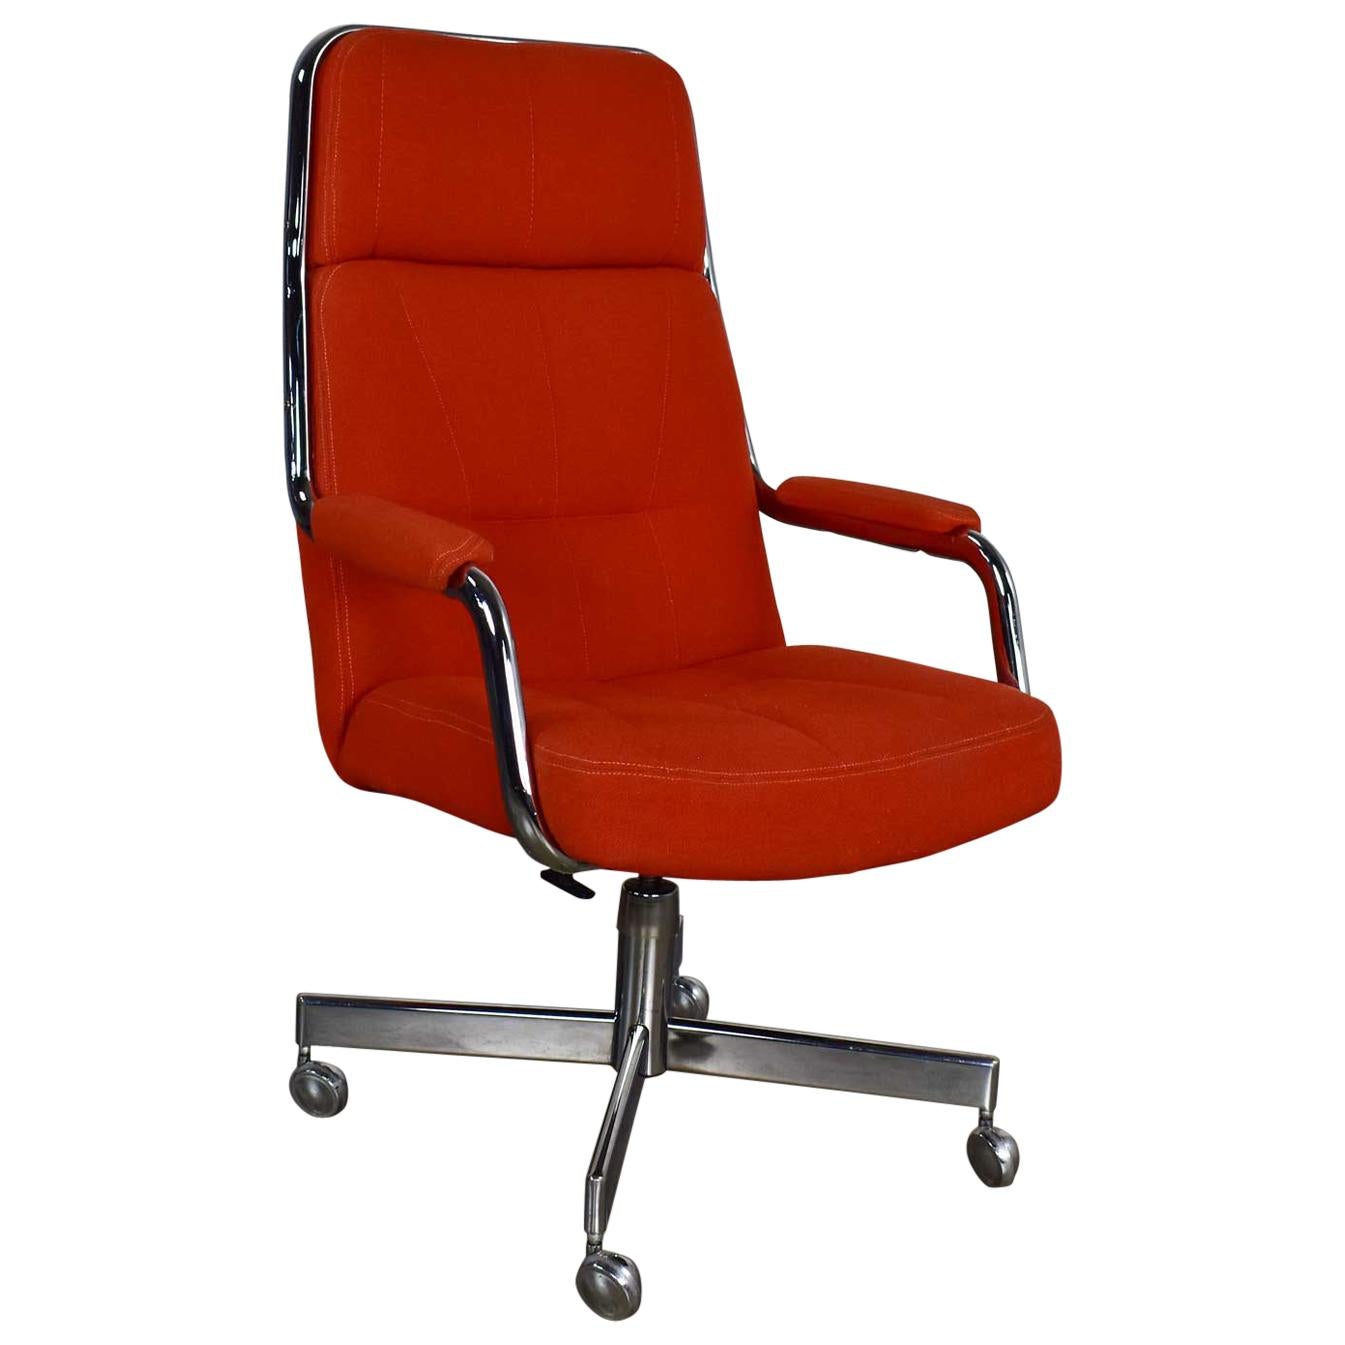 Chromcraft Adjustable Armed High Back Rolling Office Chair Orange Hopsack Fabric